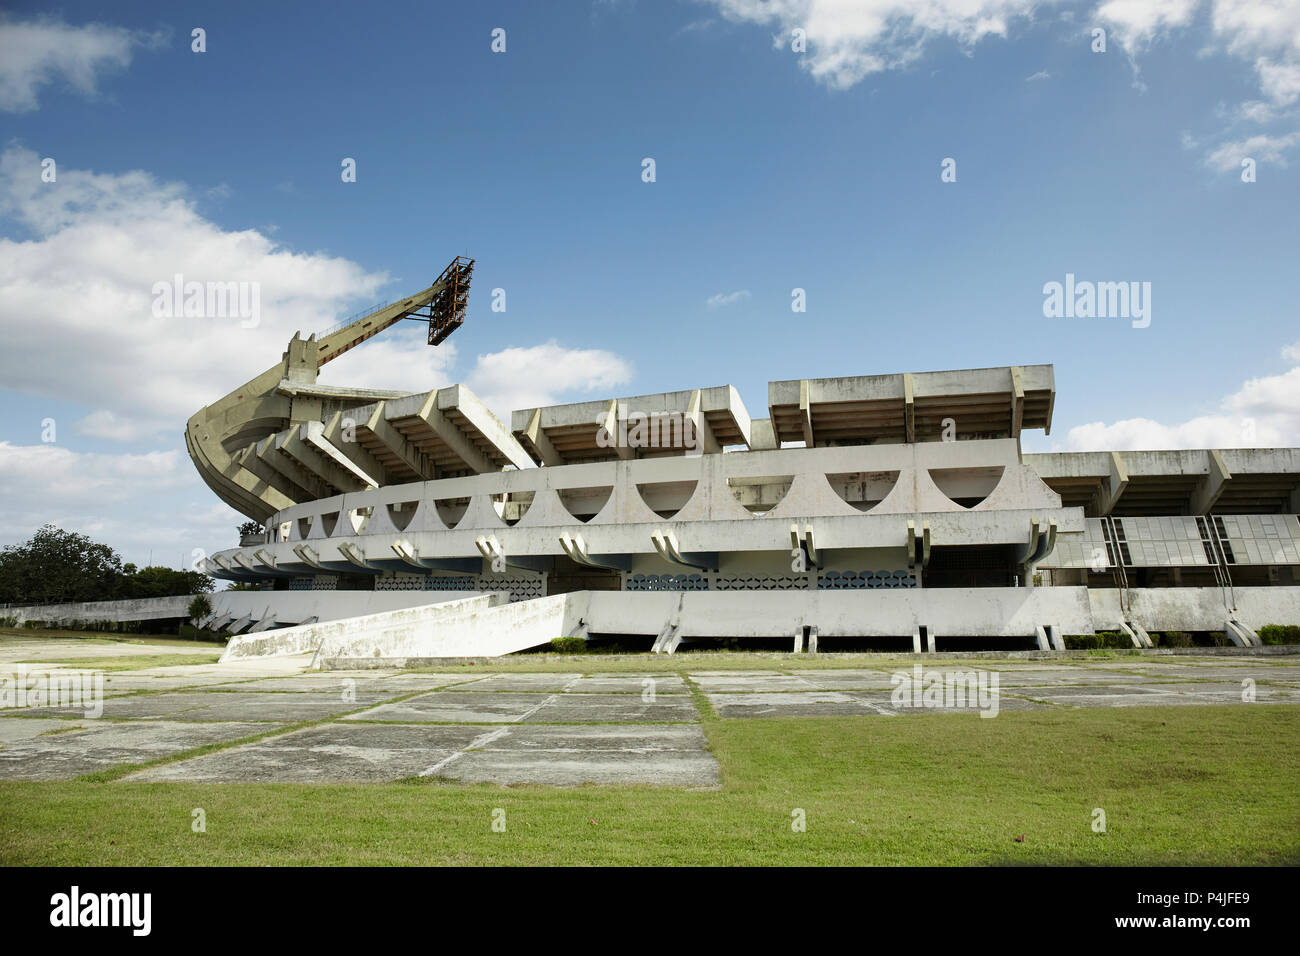 Estadio Panamericano (Stade Panaméricain de La Havane) is a multi-use stadium located near Cojimar, a city ward of Havana, Cuba. It is used mostly for Stock Photo